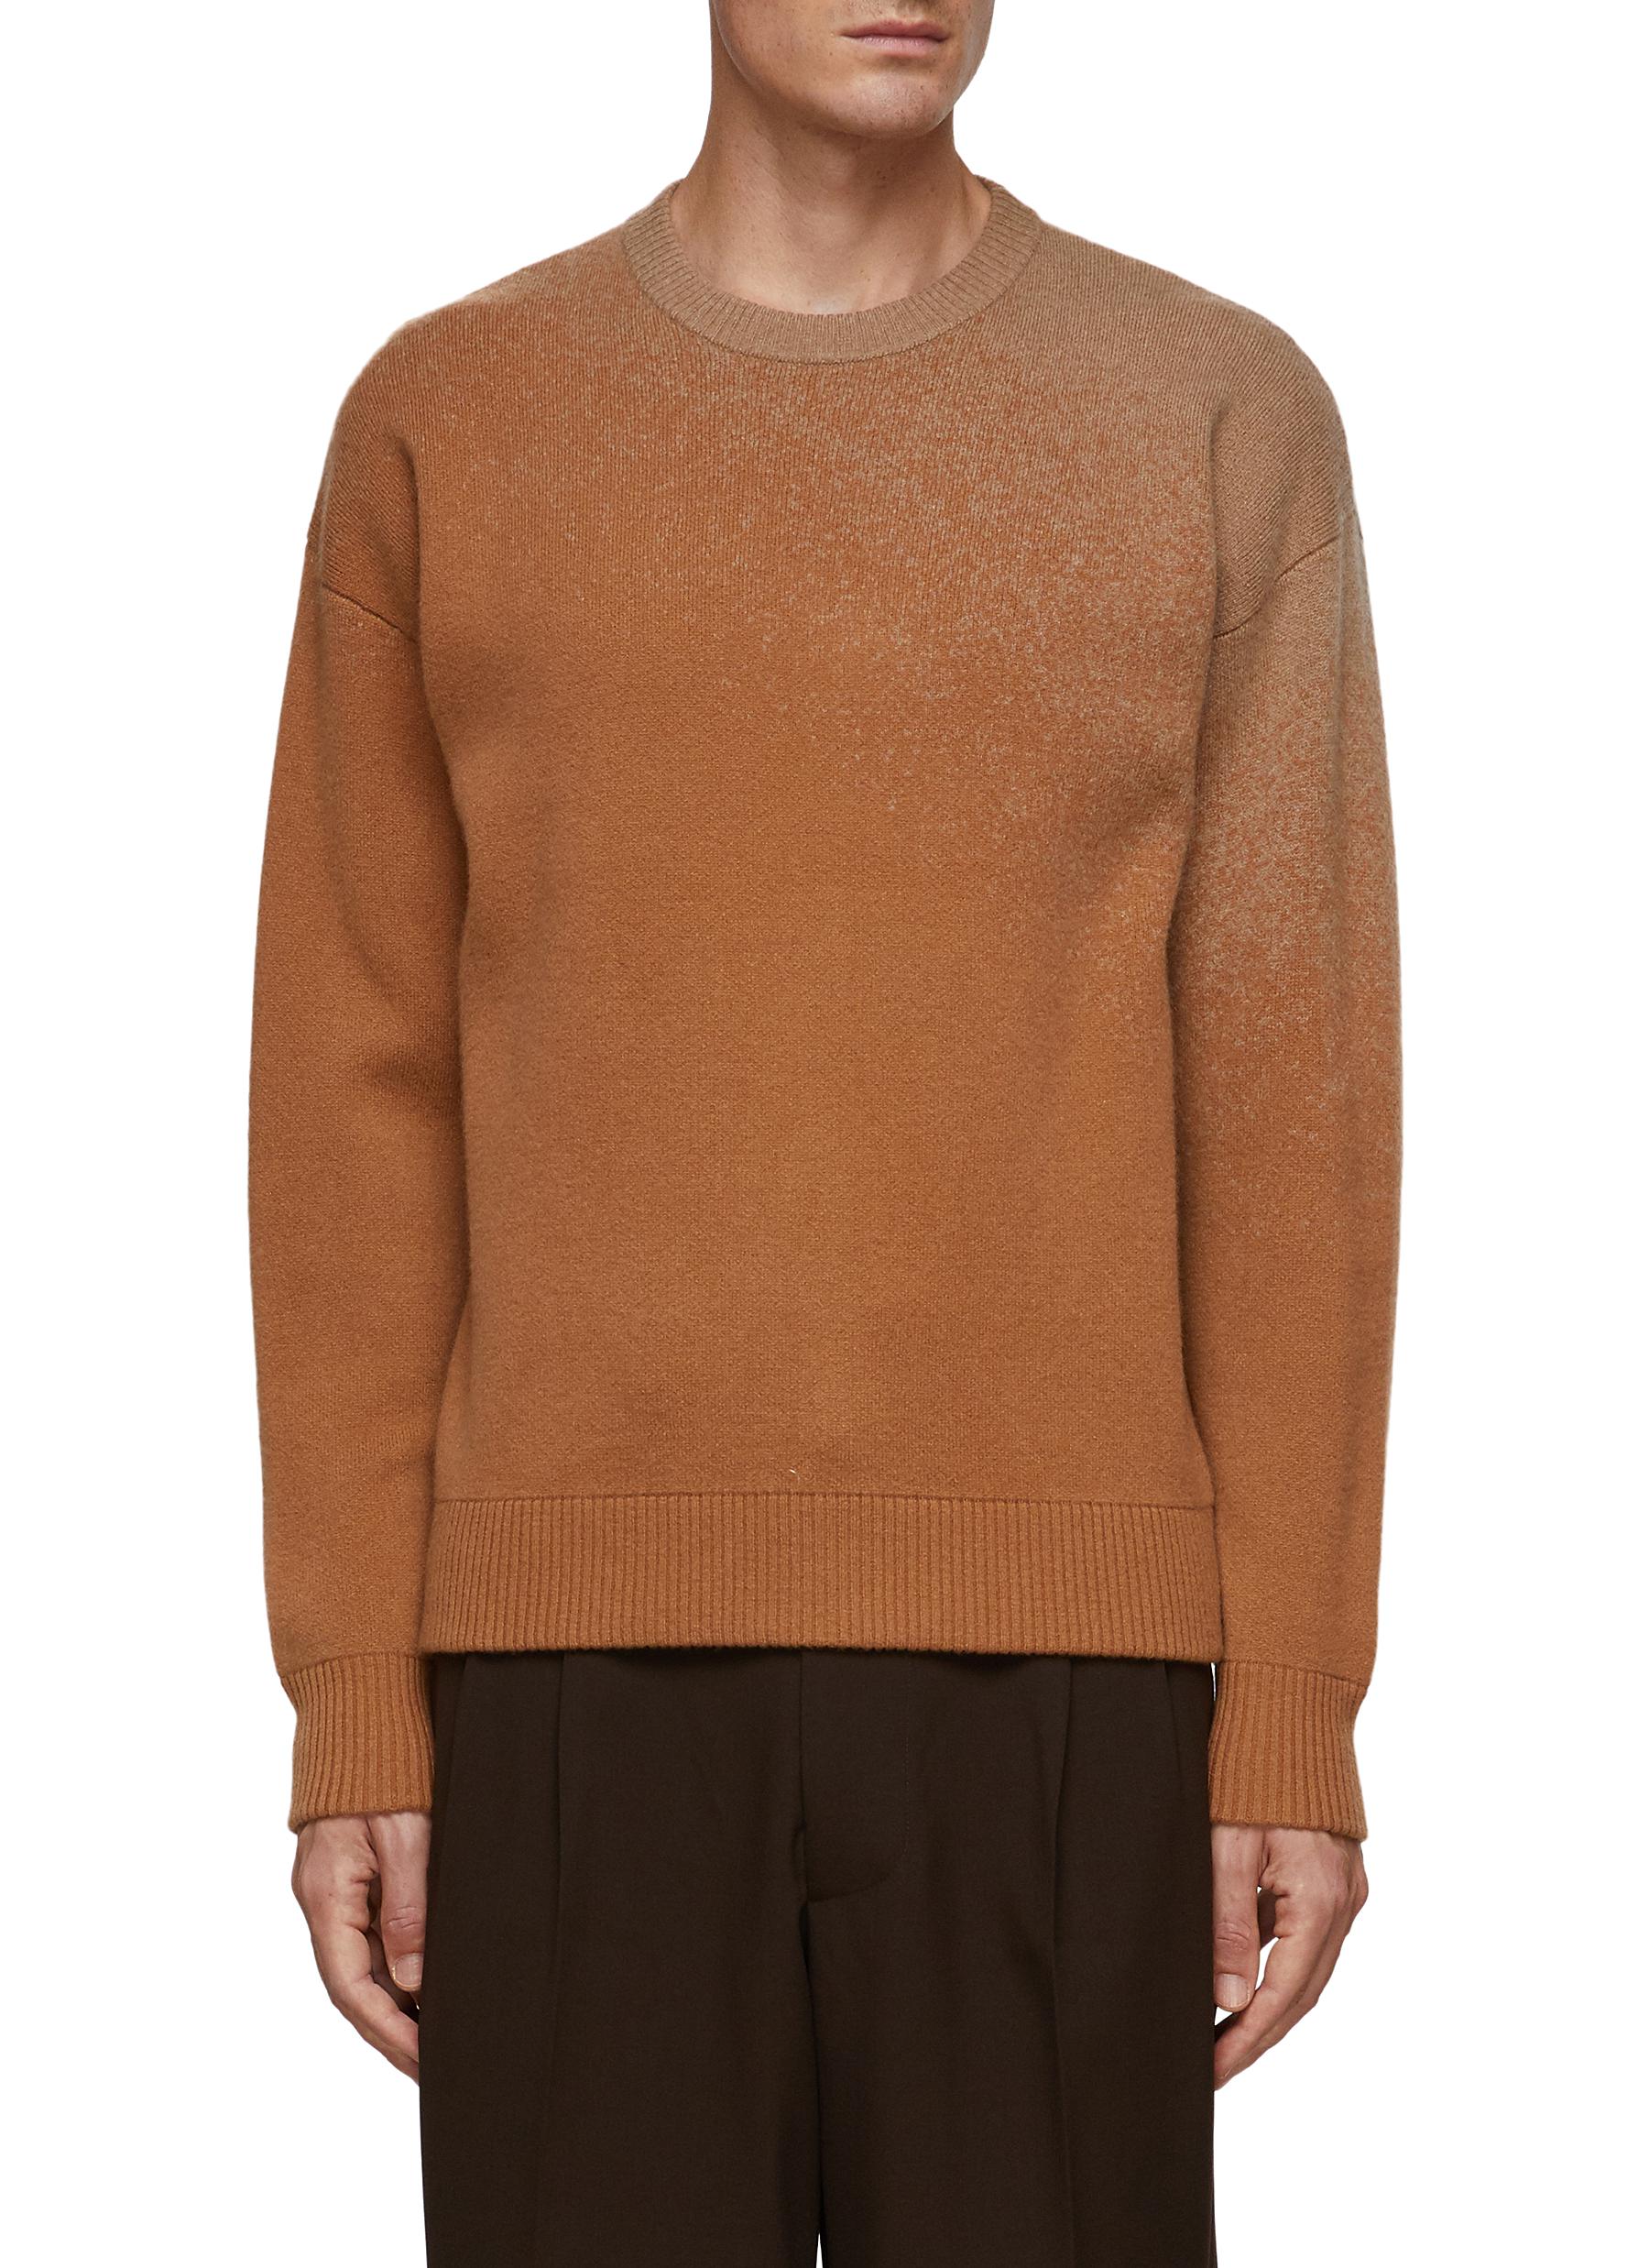 Dreyden Ombré Cashmere Knit Crewneck Sweater In Orange